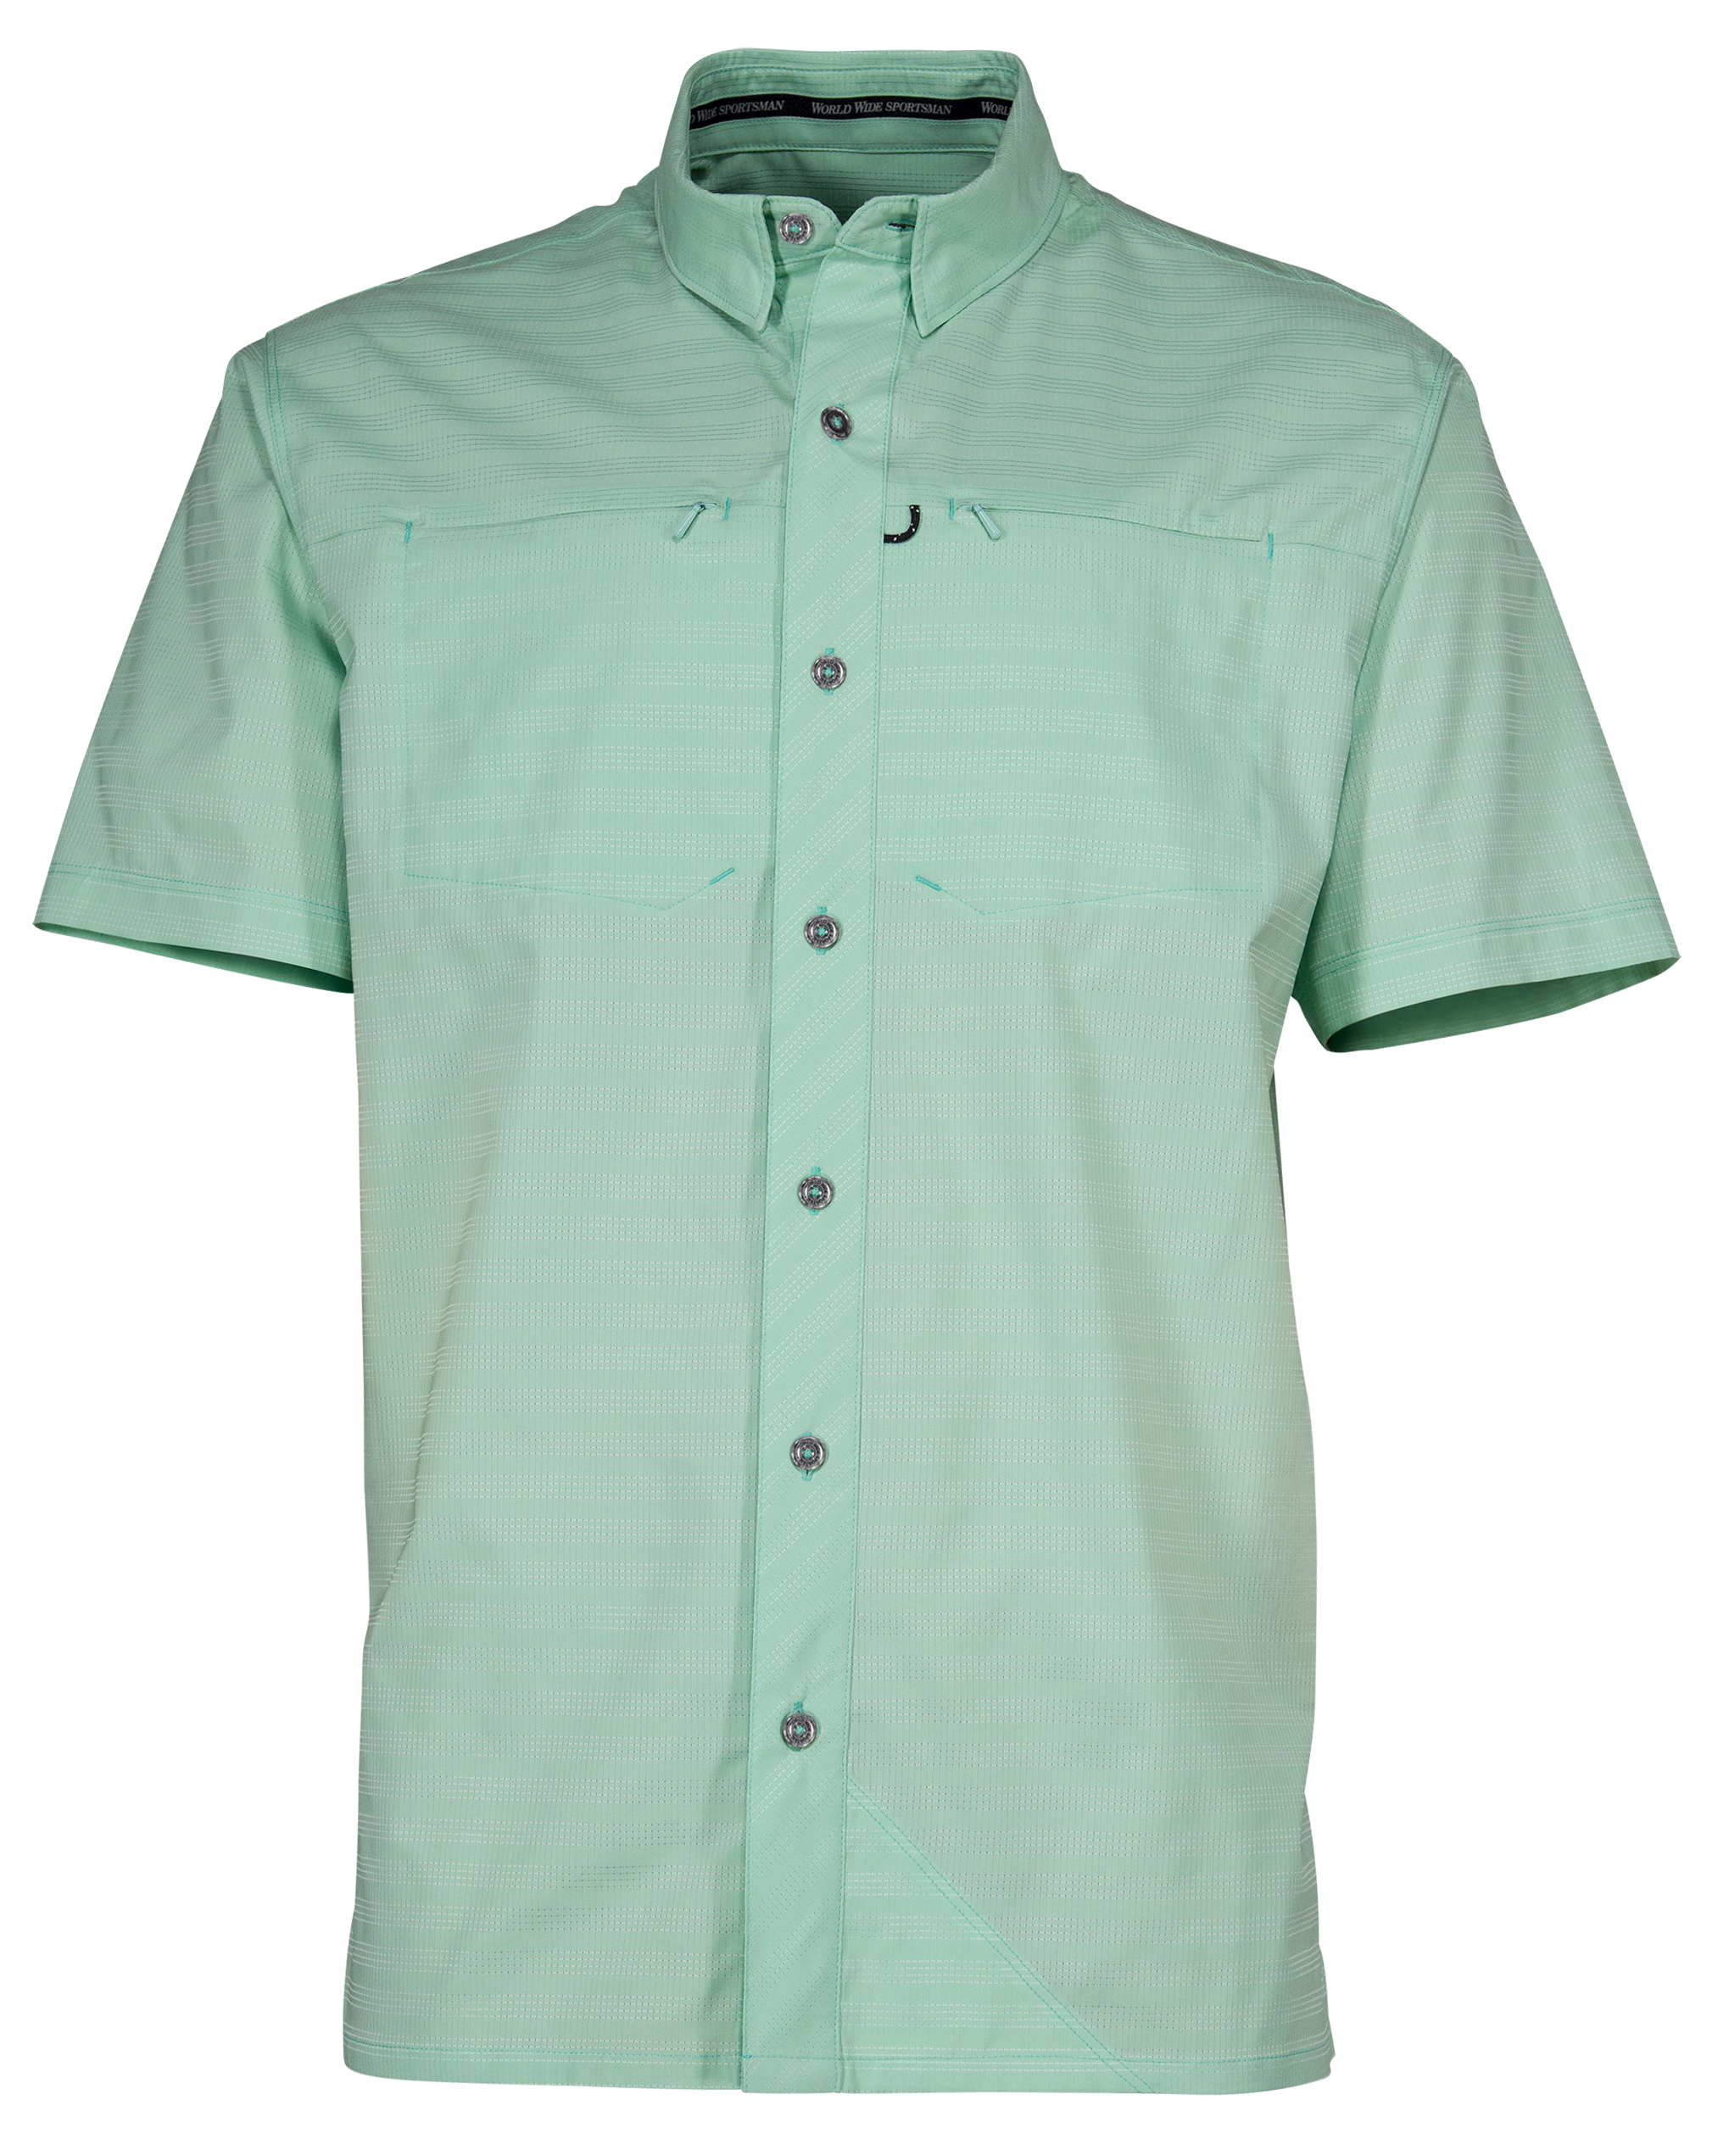 World Wide Sportsman Seacrest 2-Pocket Short-Sleeve Button-Down Shirt for Men - Lichen - S